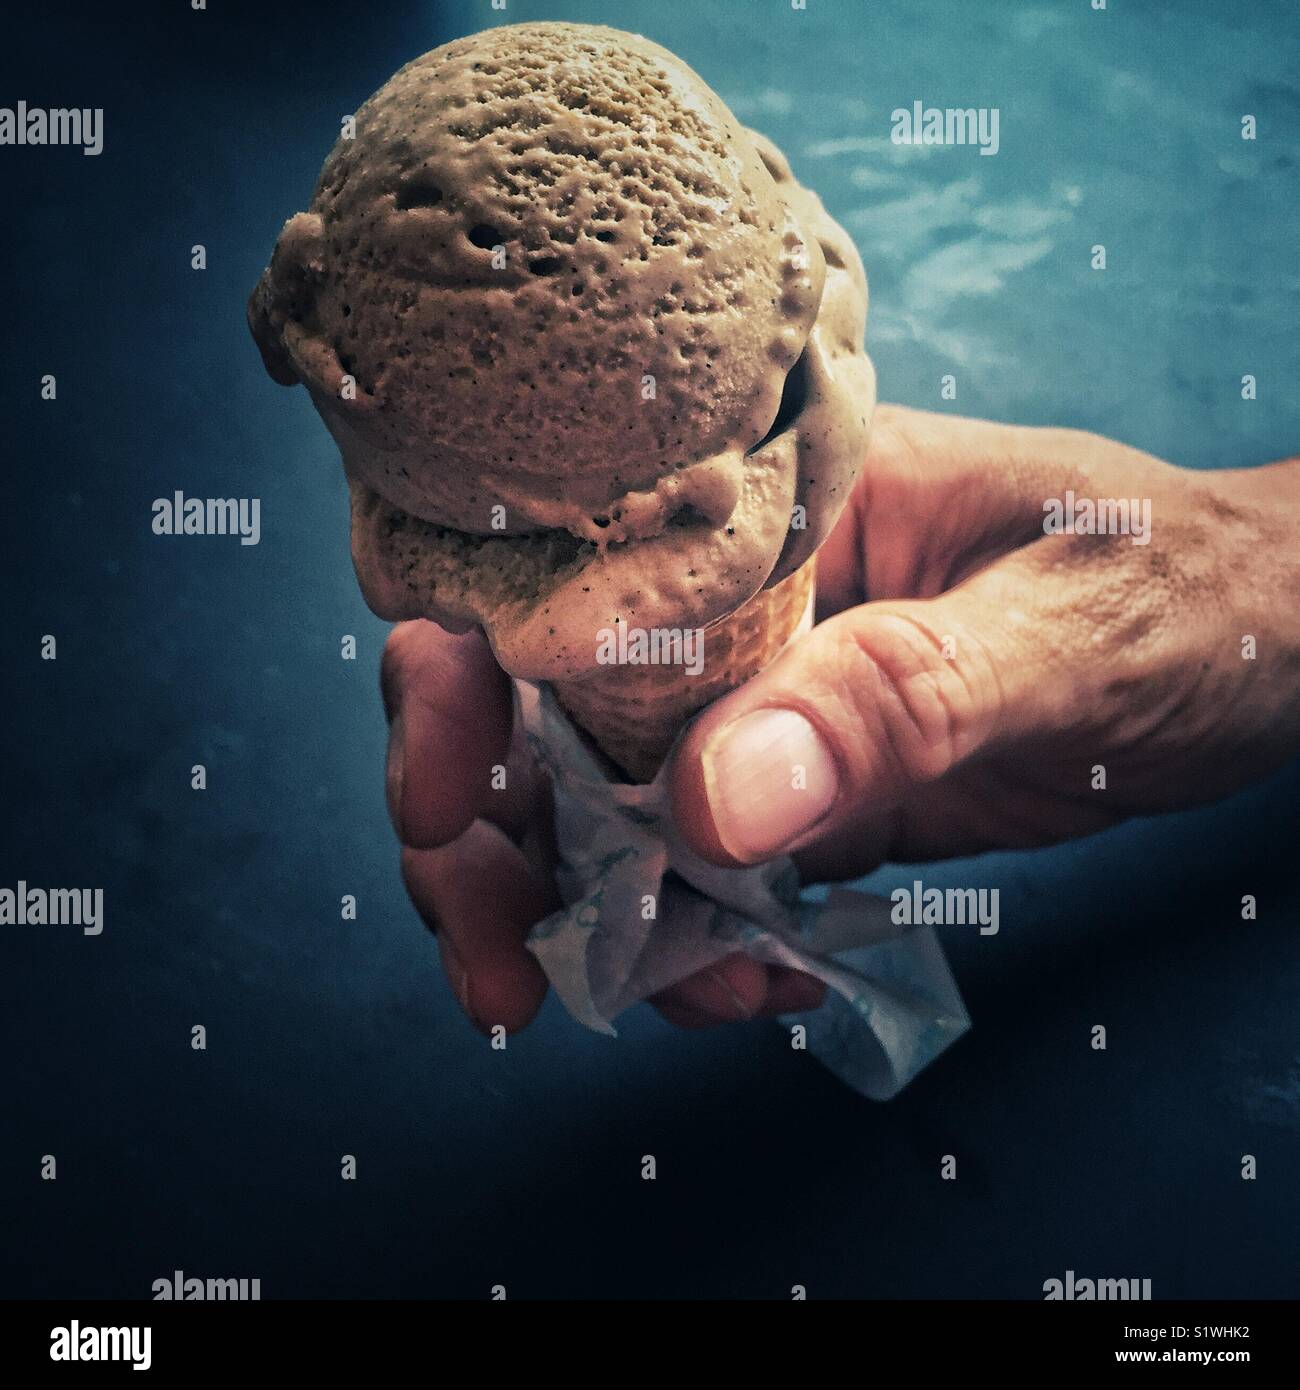 Man's hand holding chocolate ice cream cone Stock Photo